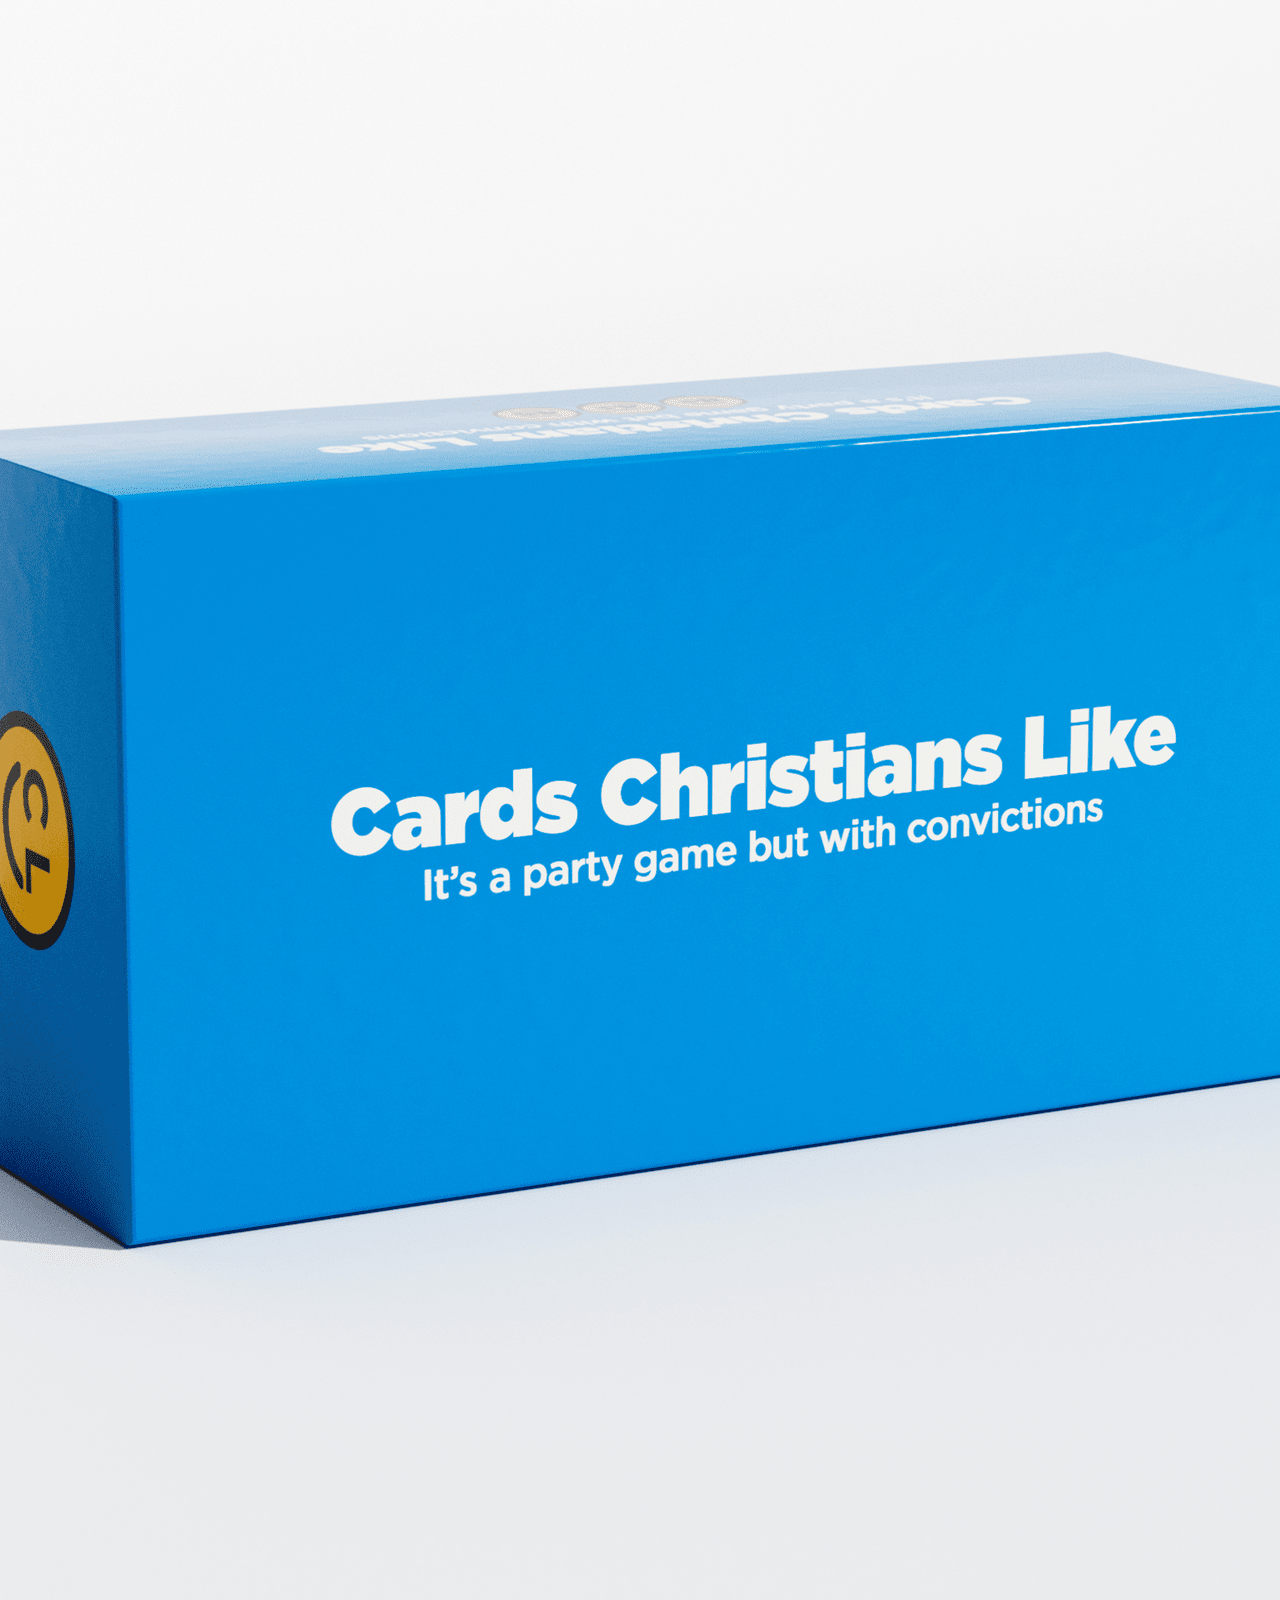 Cards Christians Like